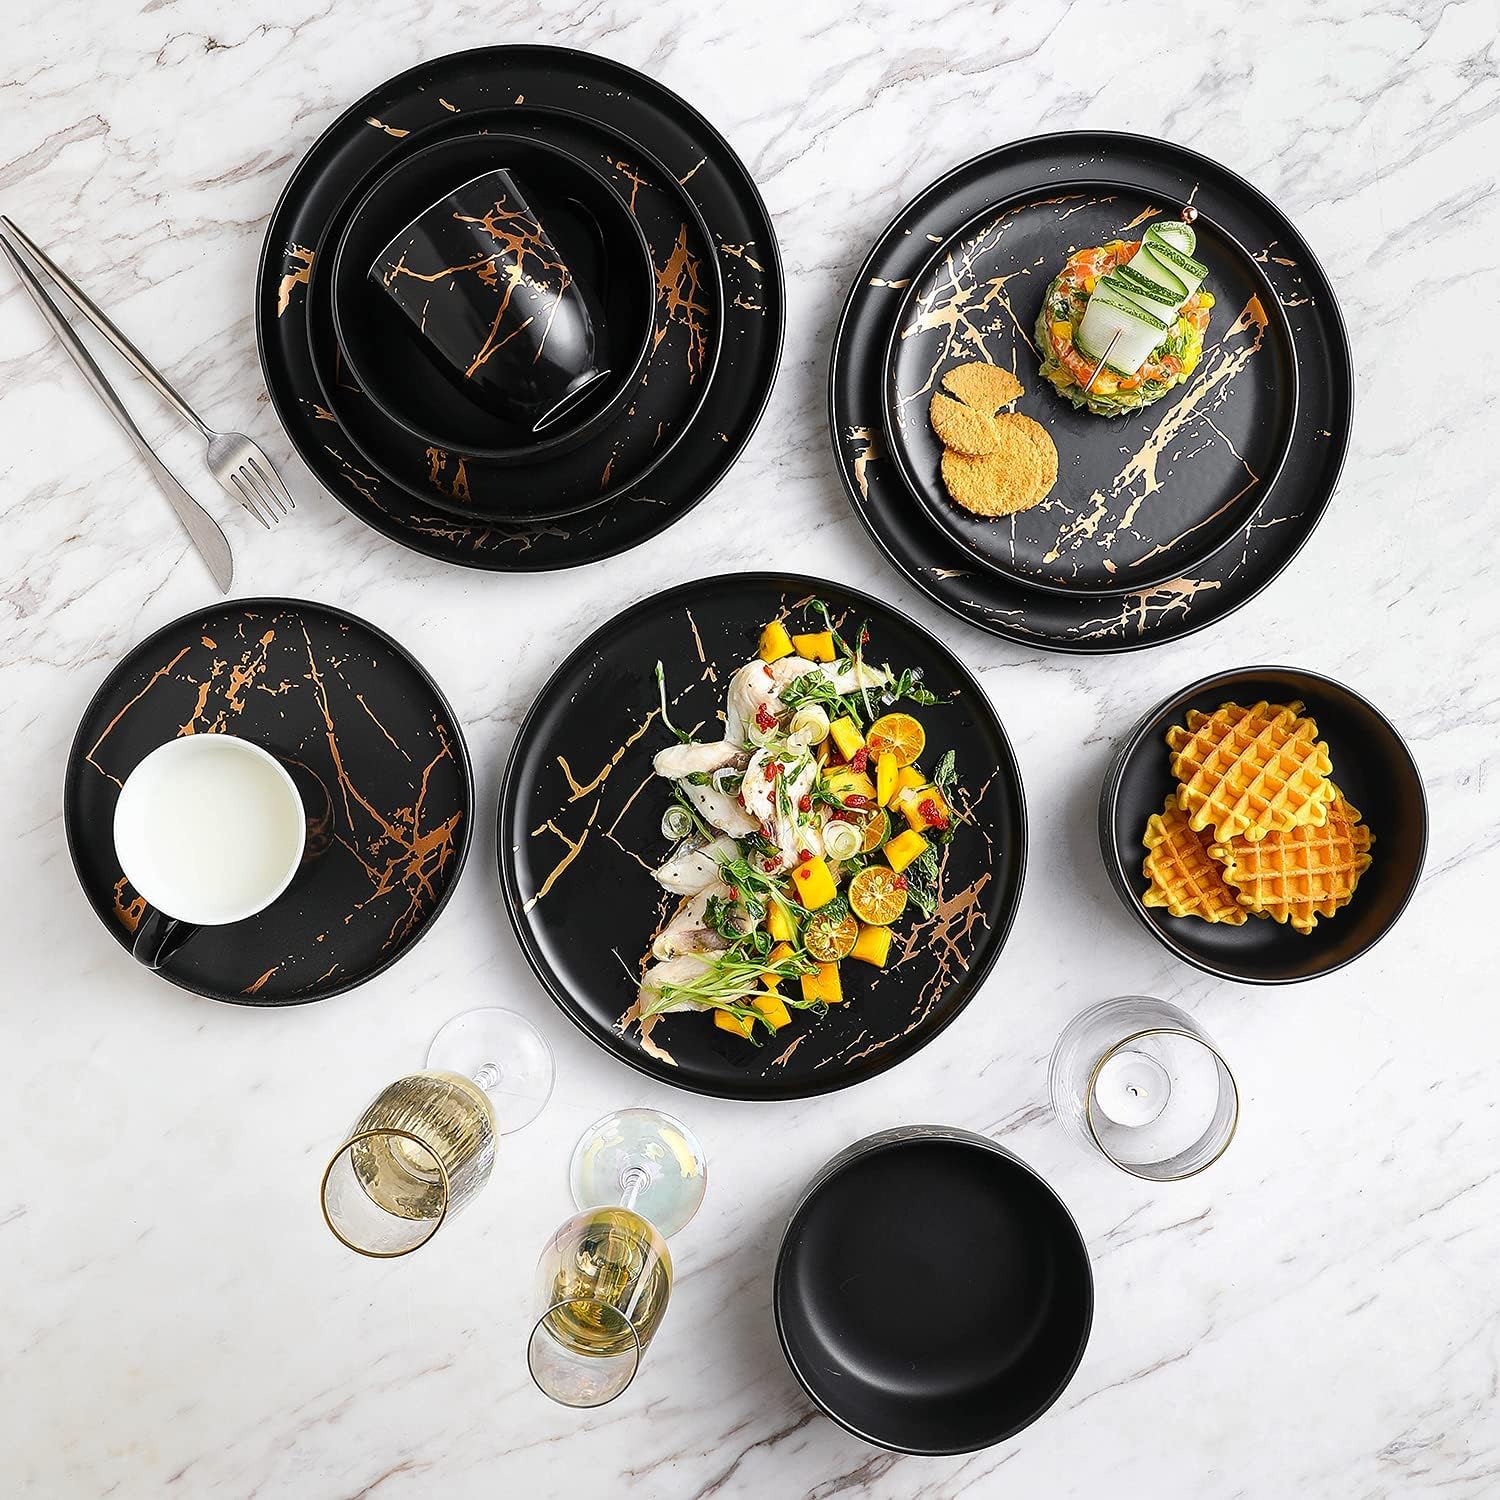 Stone Lain Modern Gold Splash Exquisite Fine China Dinnerware Set, 16 Piece - Service for 4, White & Gold